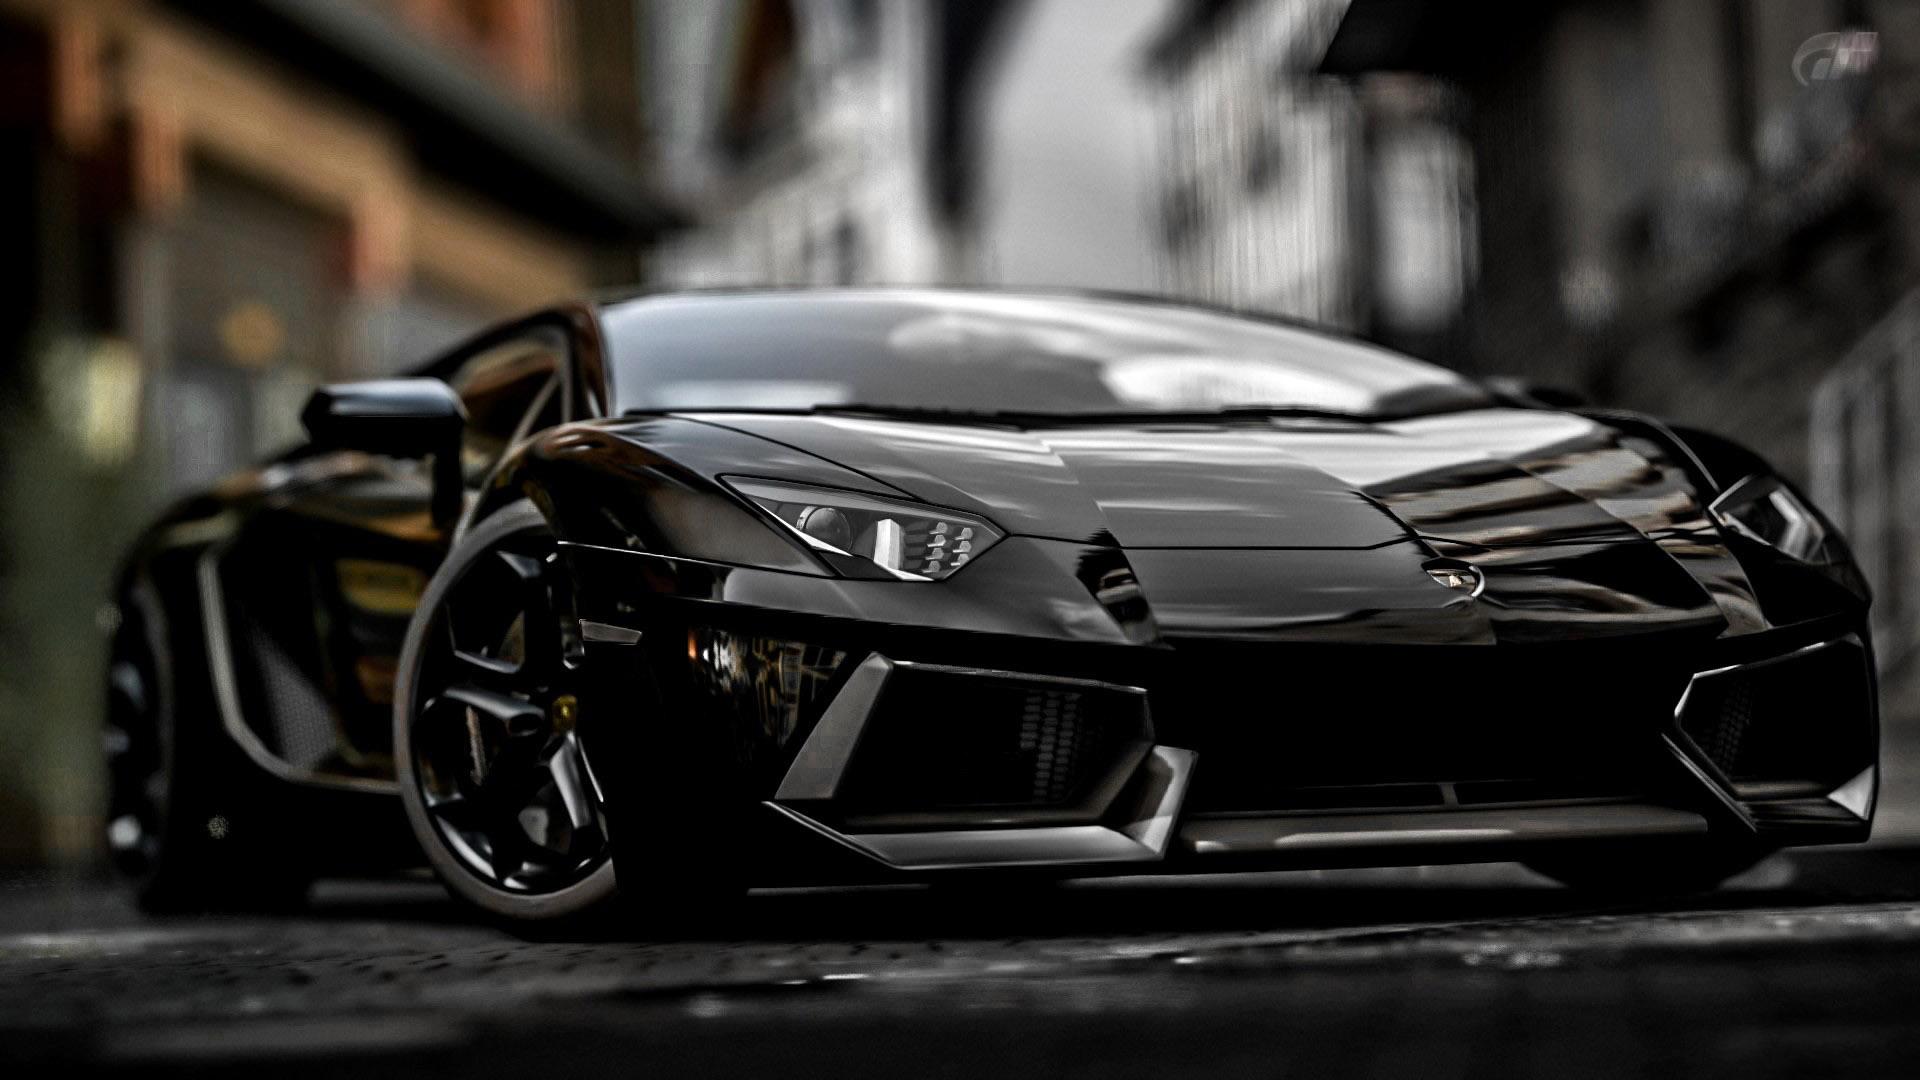 Cool Lamborghini Murcielago Desktop Wallpaper. Car Picture